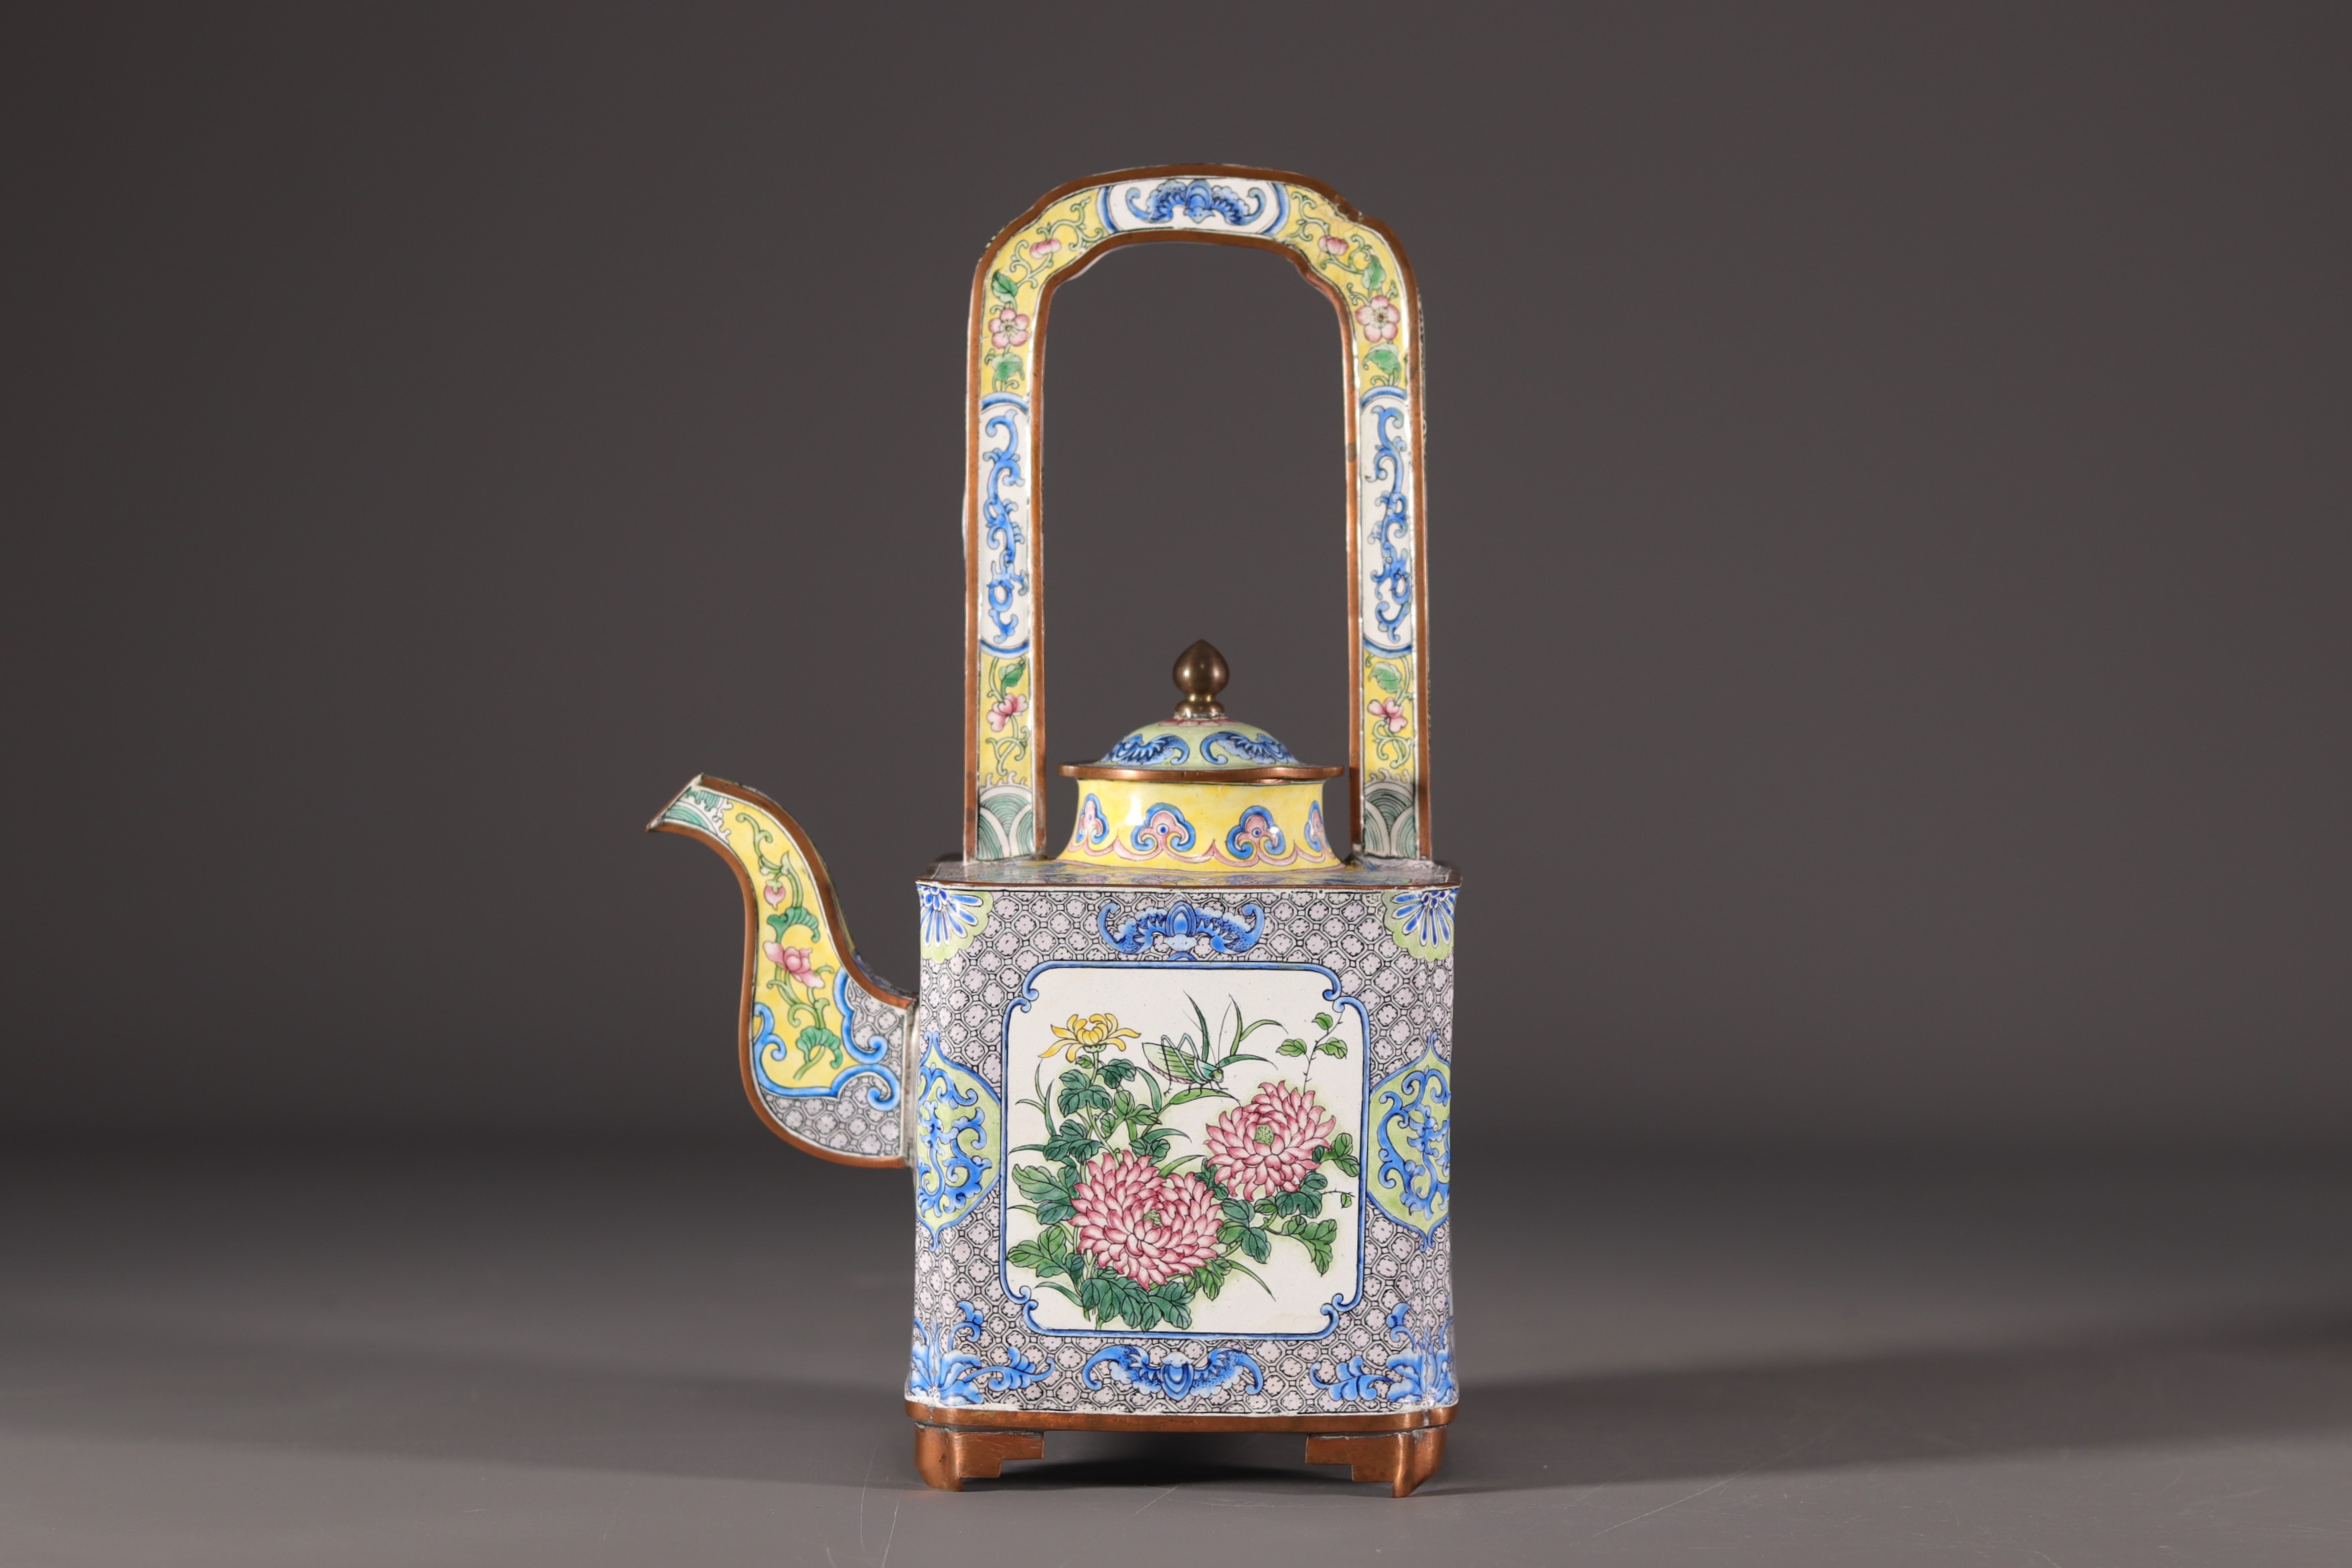 China - Large cloisonne enamel teapot with floral design. - Image 5 of 5